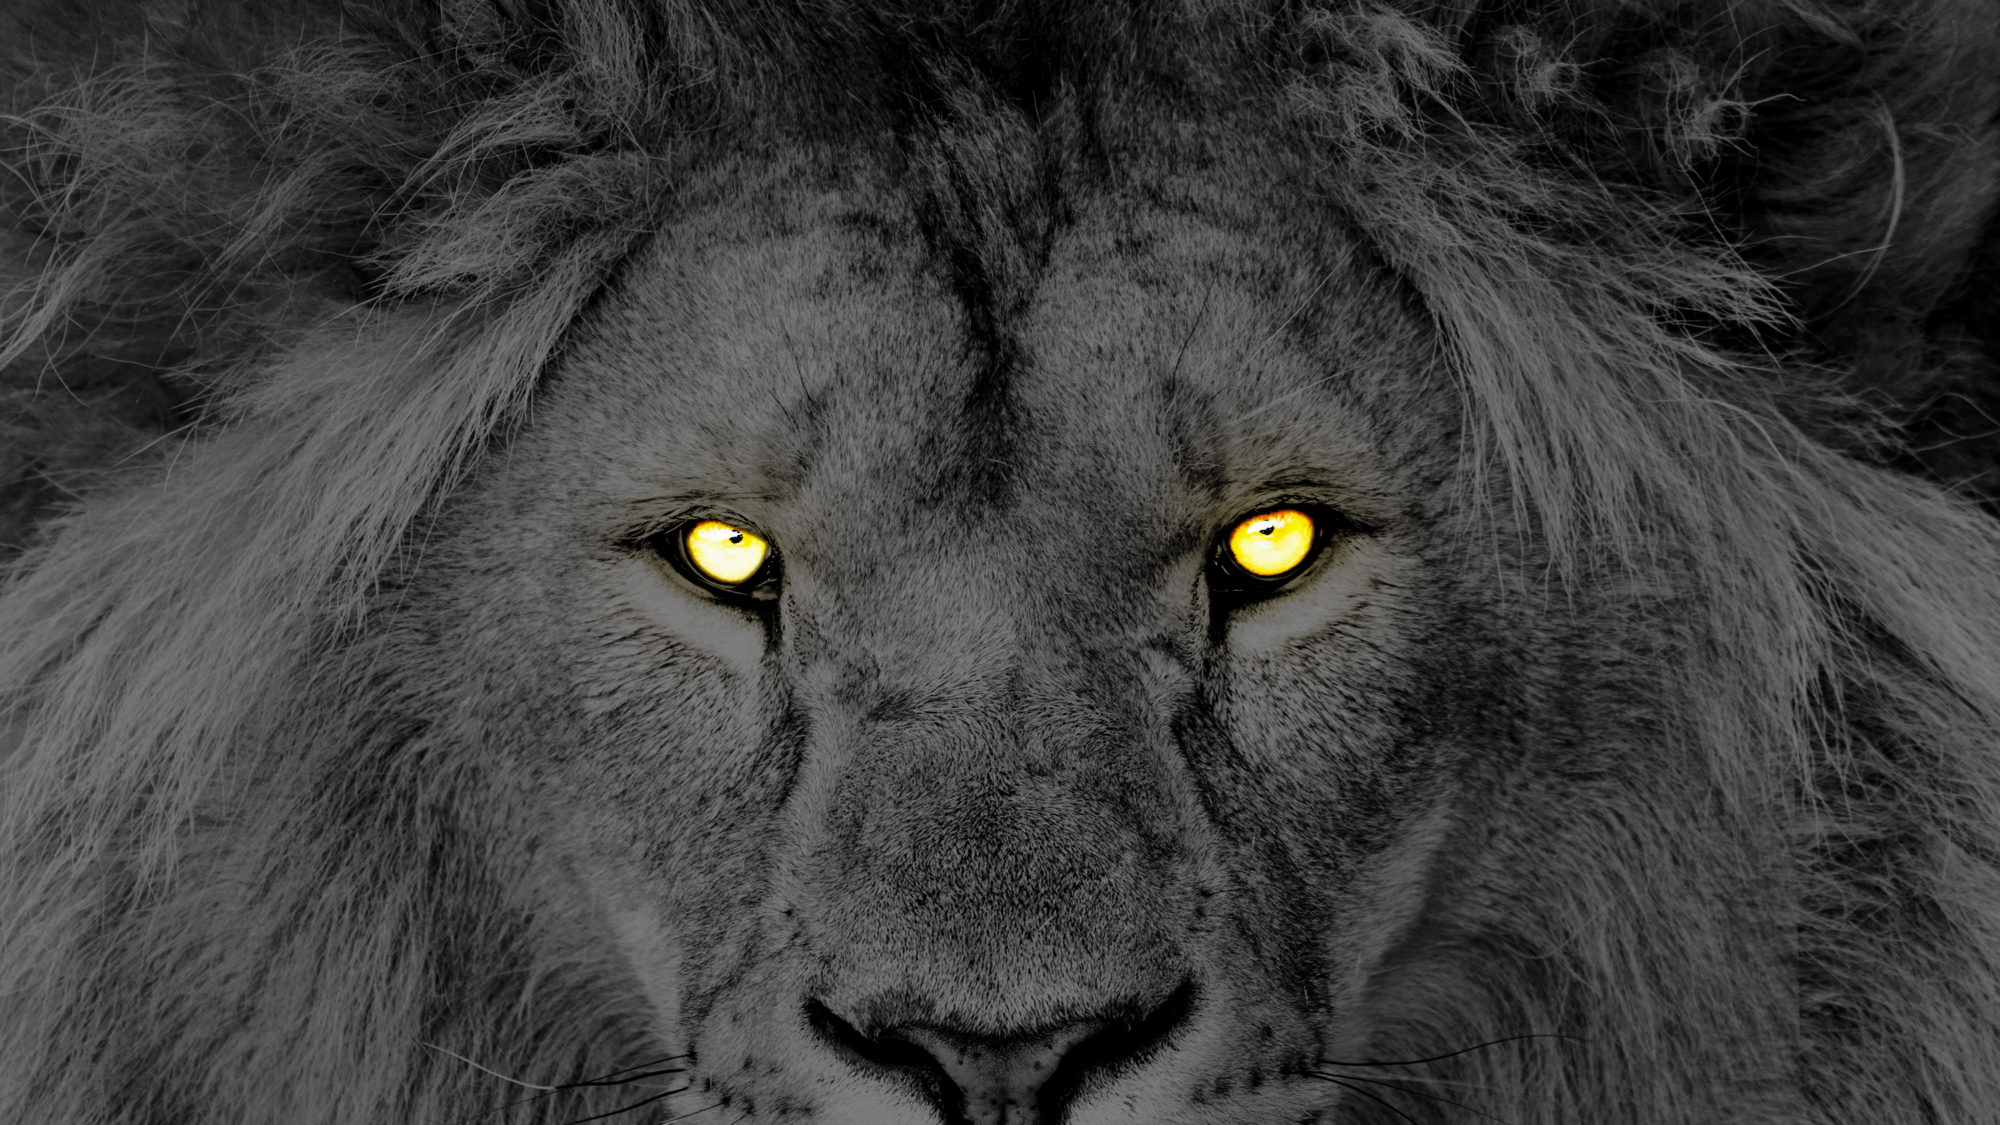 roaring lion images hd download